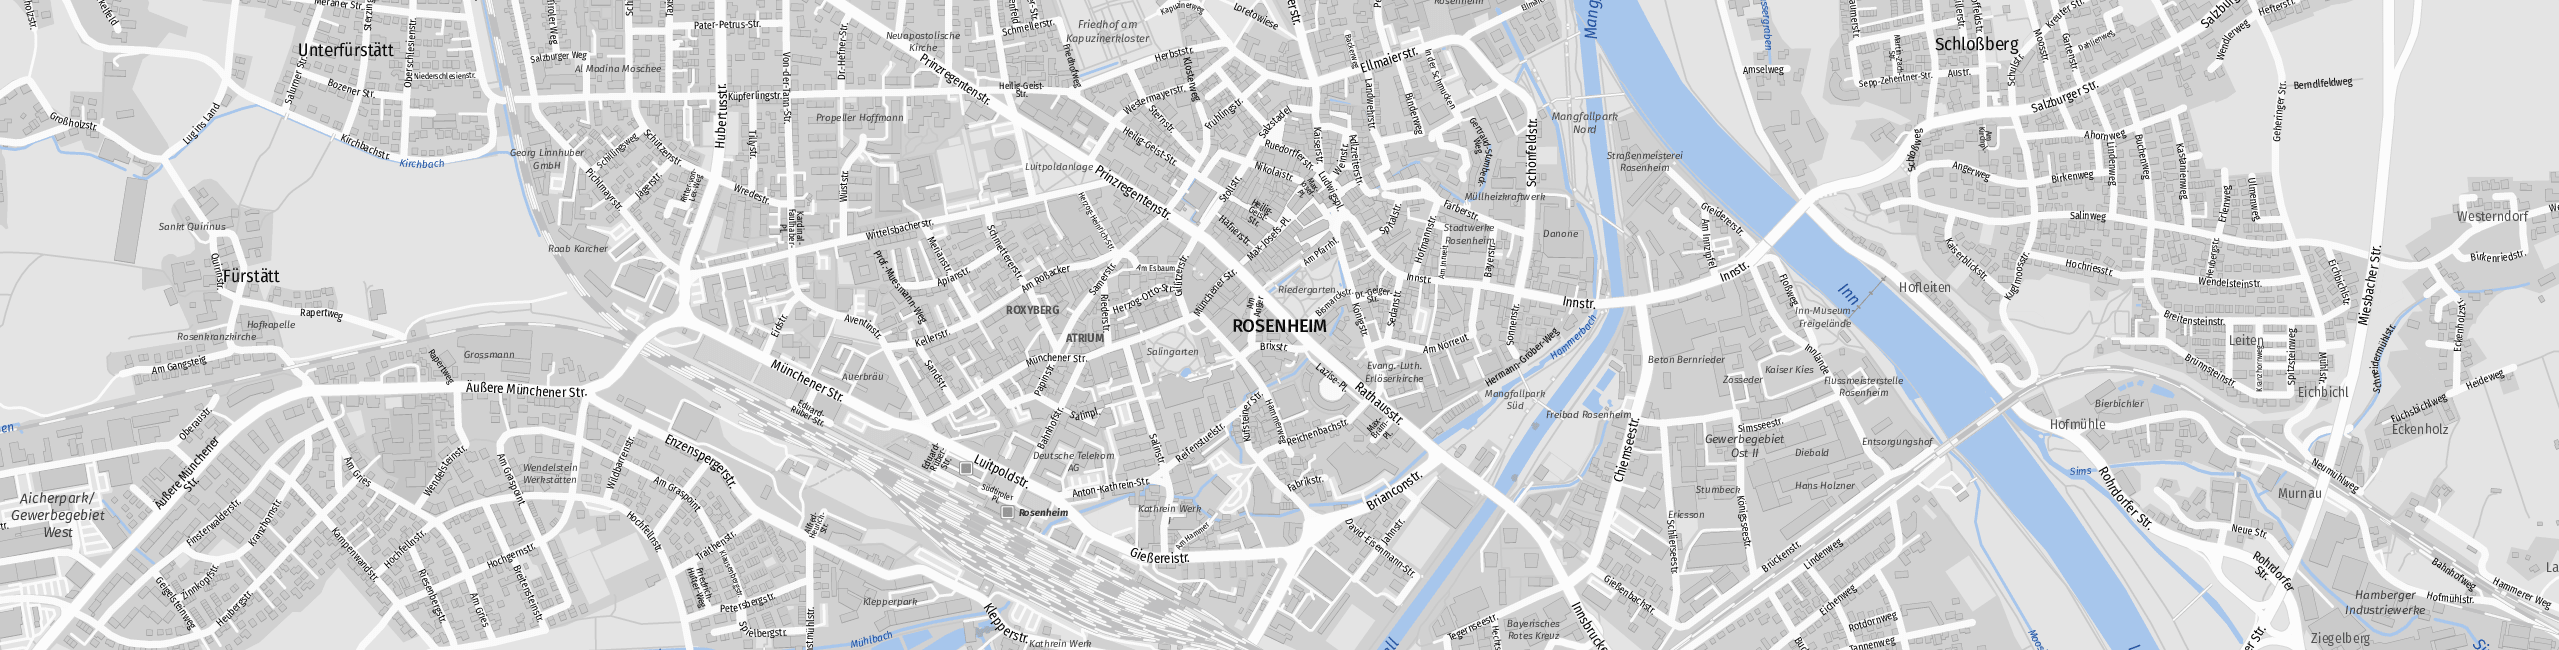 Stadtplan Rosenheim zum Downloaden.